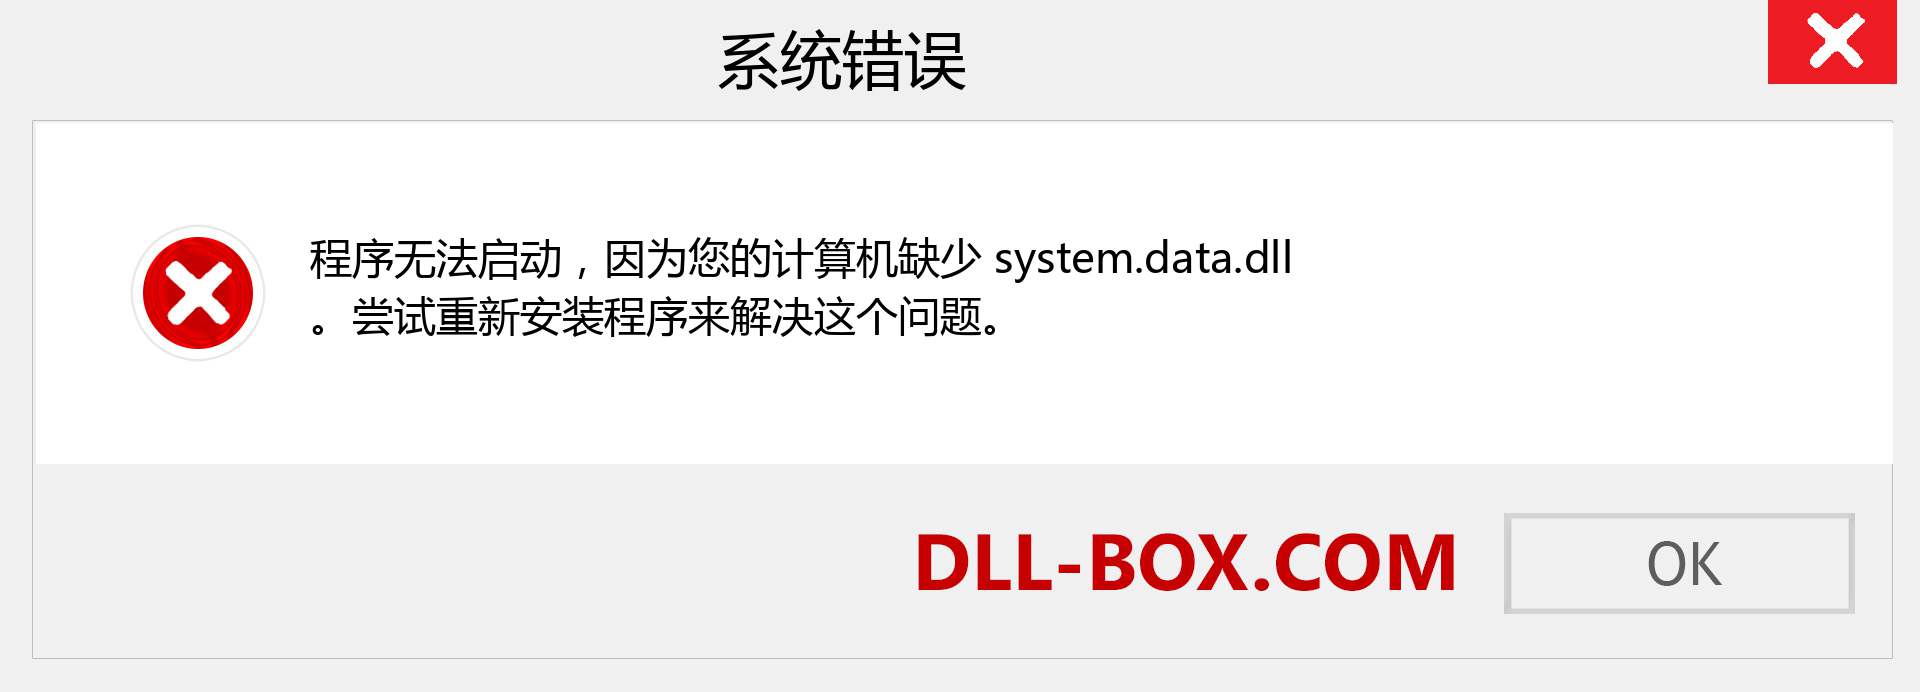 system.data.dll 文件丢失？。 适用于 Windows 7、8、10 的下载 - 修复 Windows、照片、图像上的 system.data dll 丢失错误